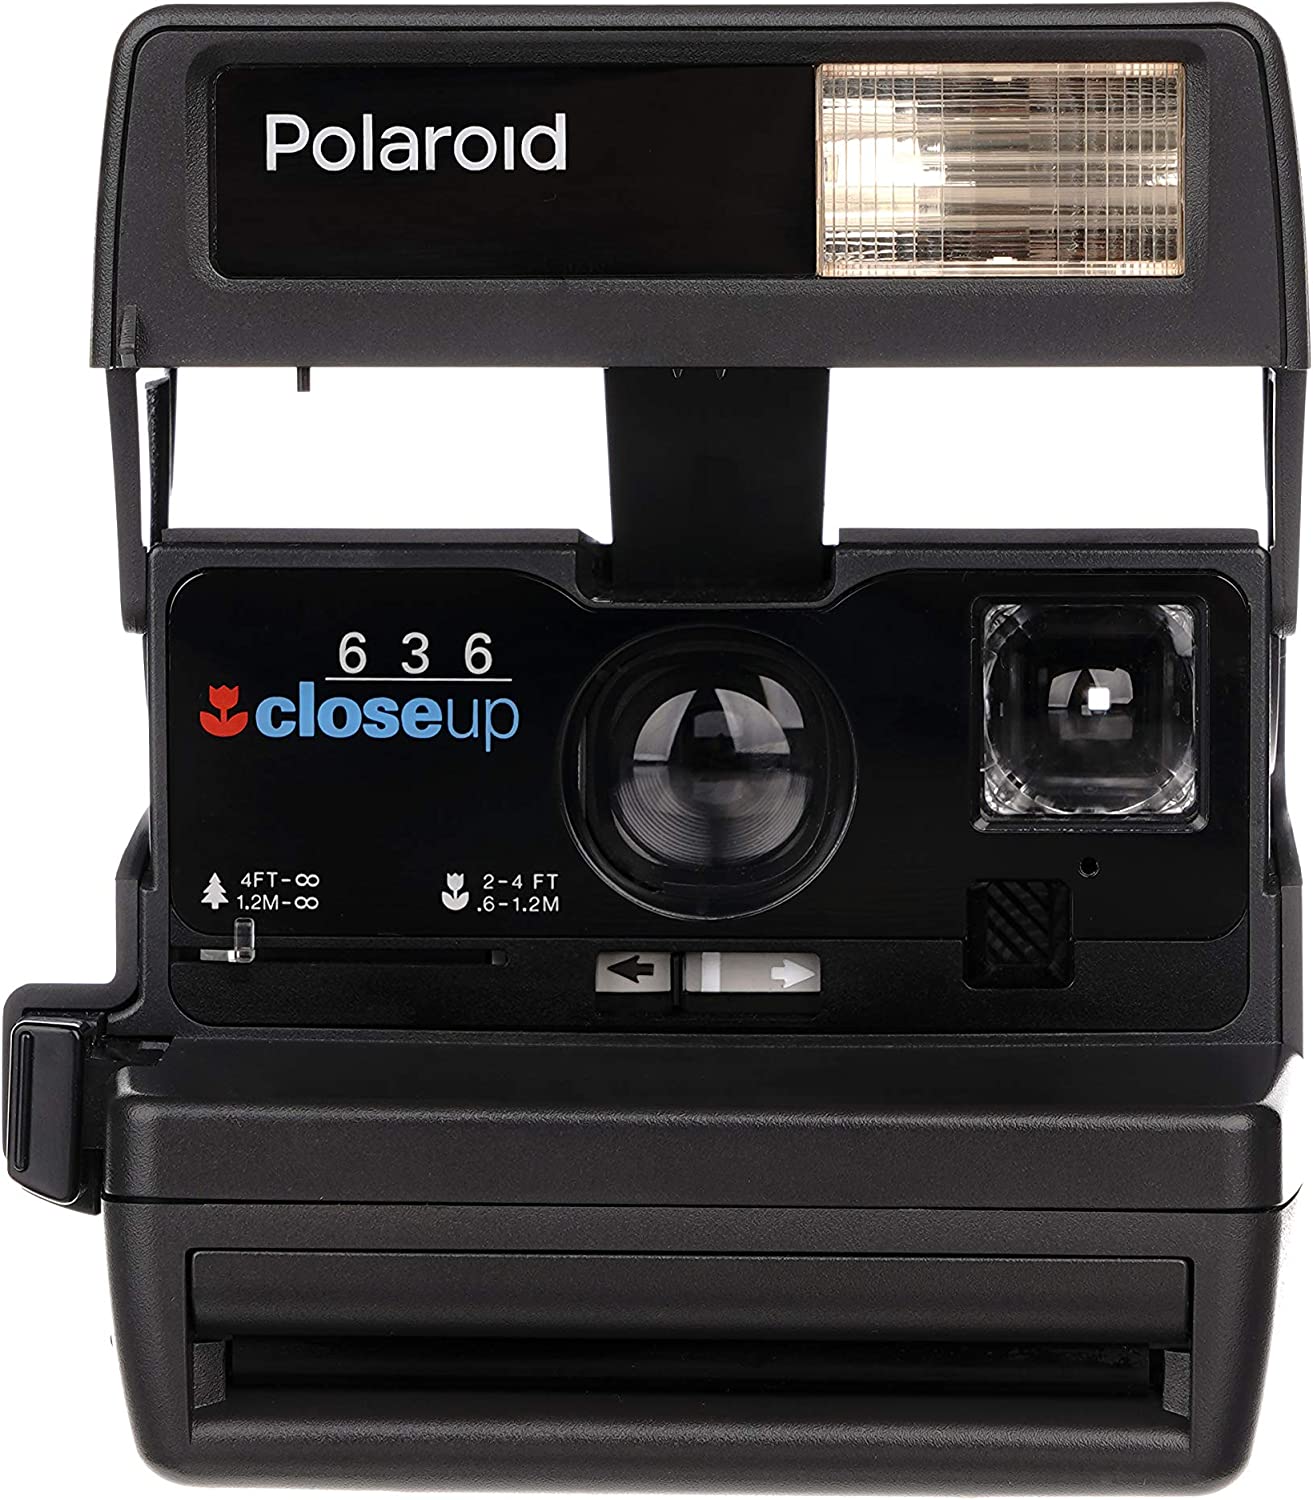 Polraoid camera 636